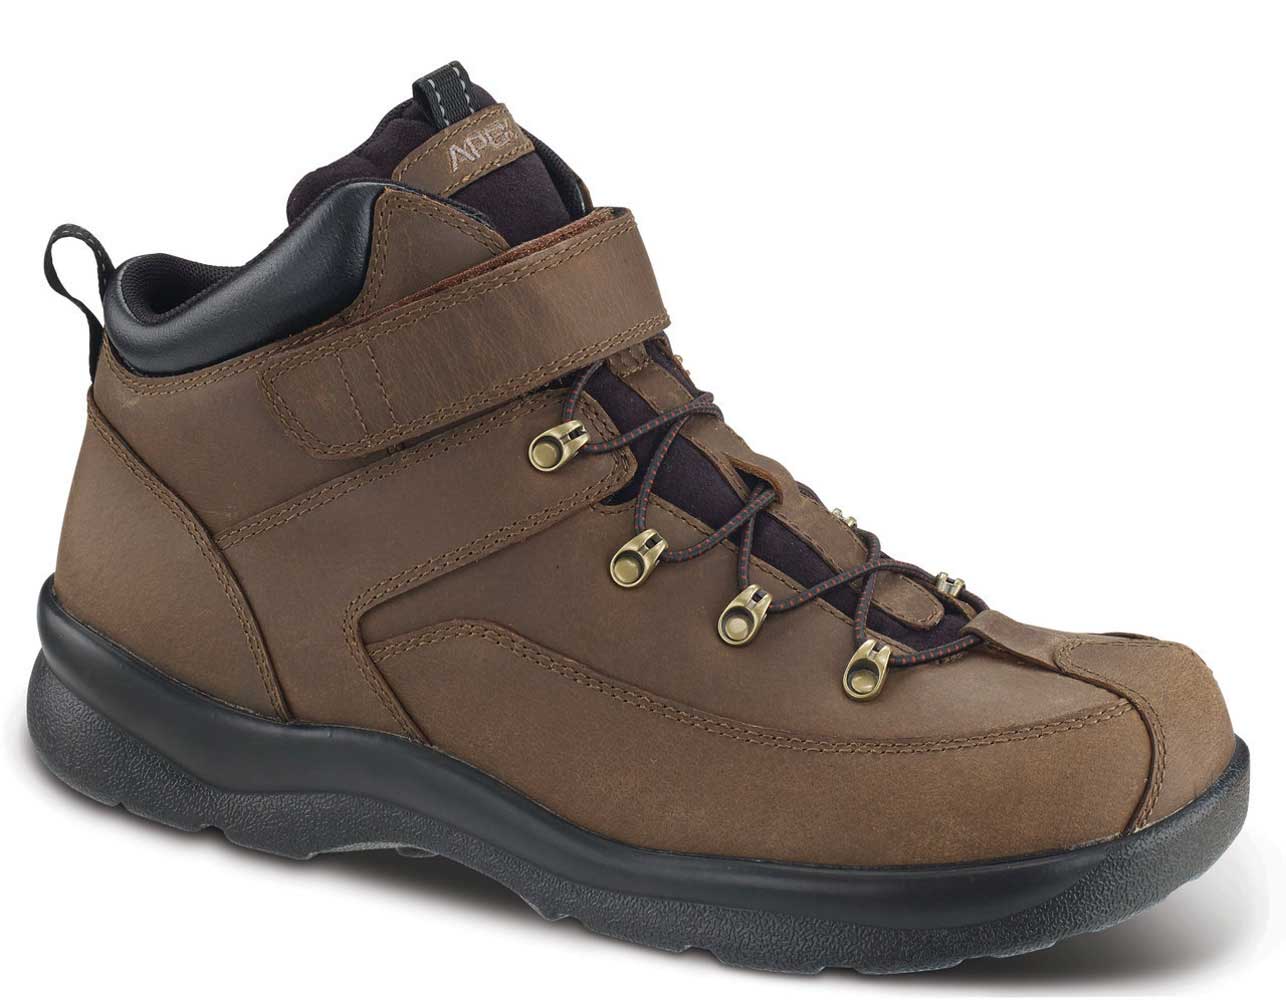 The Apex Ariya Hiking Boot A4100M Diabetic, Therapeutic, Orthopedic, and Comfort Shoe